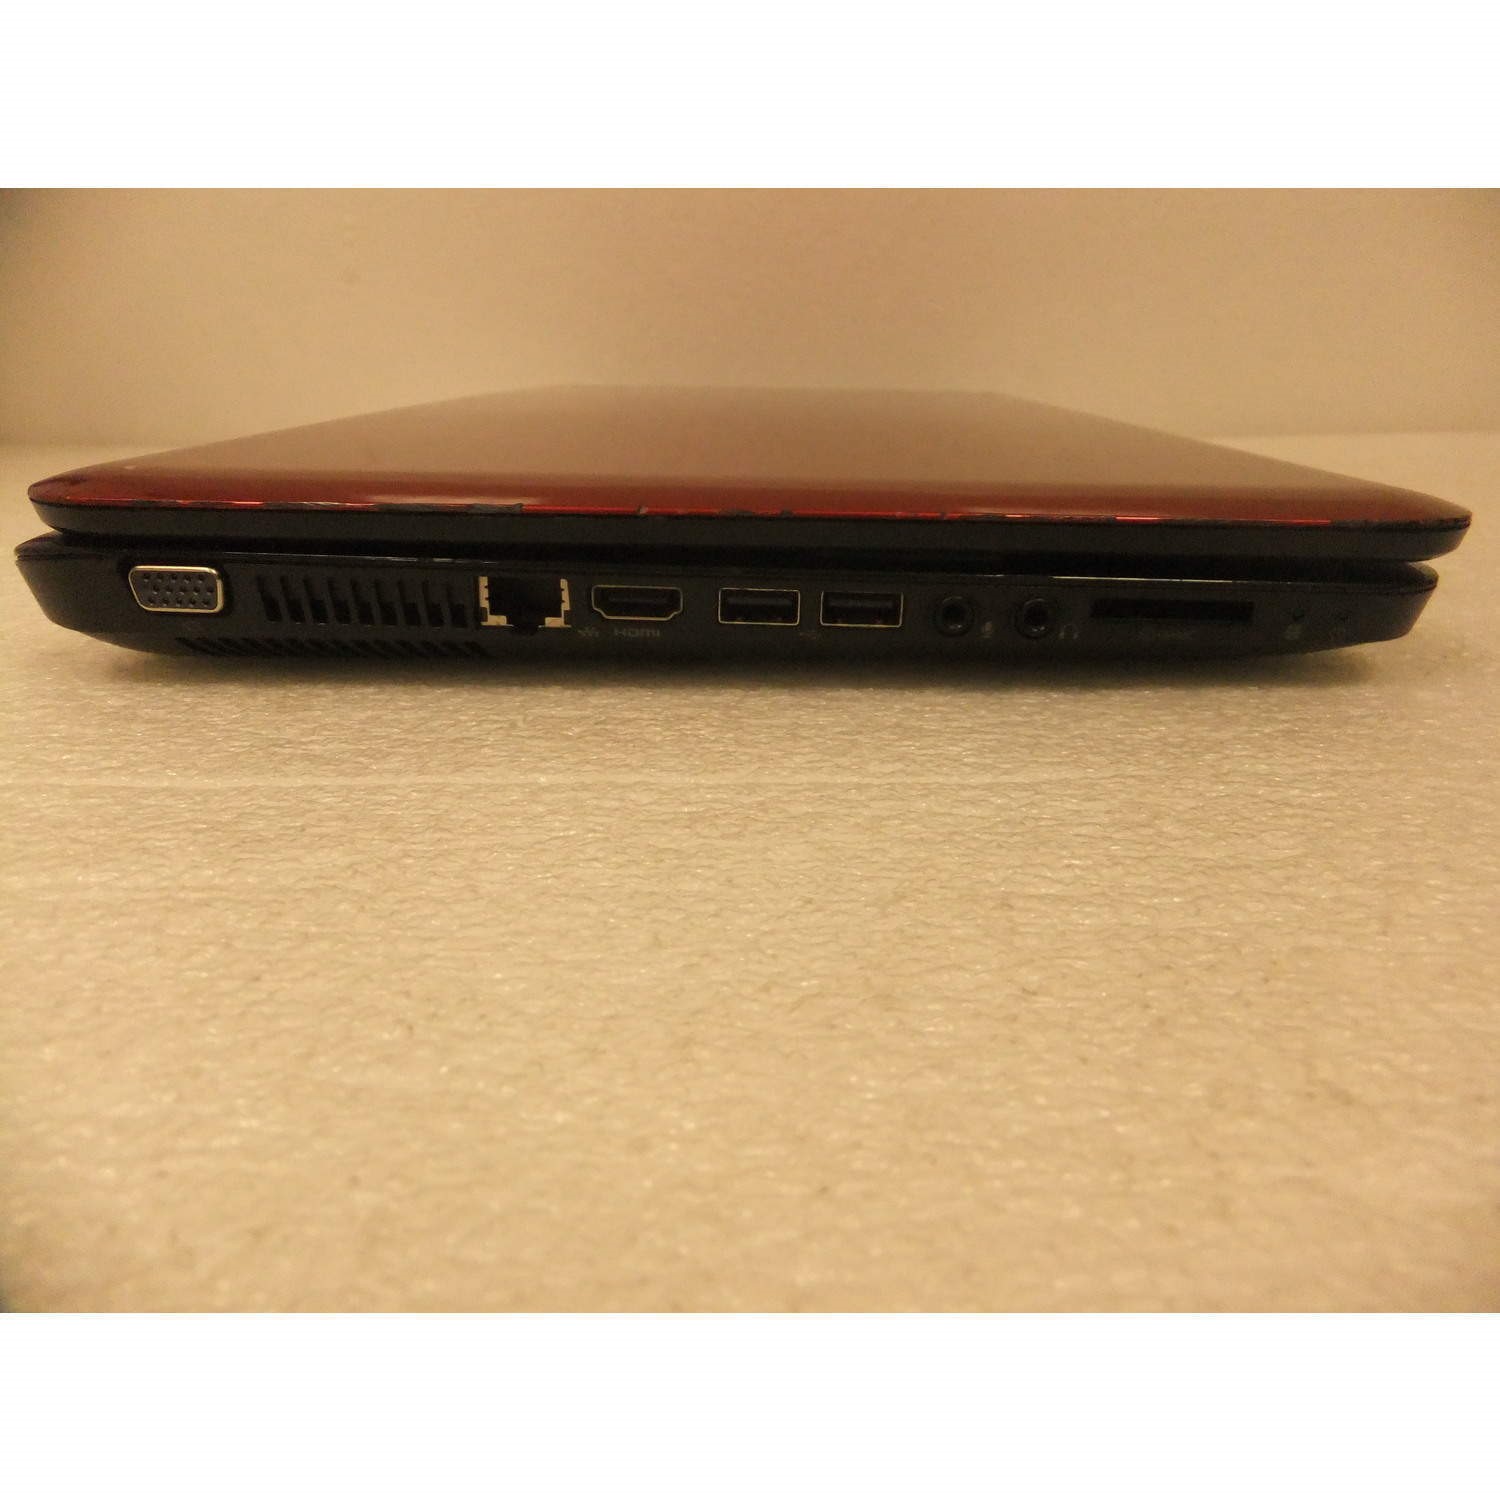 storting kloof medeklinker Pre-Owned Grade T3 HP Pavilion g6 Red/Black Intel Core i5 2430M GHz 6GB 750  GB 15.6in Windows 7 Home Premium 64-Bit DVD-RW Laptop 30days - Laptops  Direct